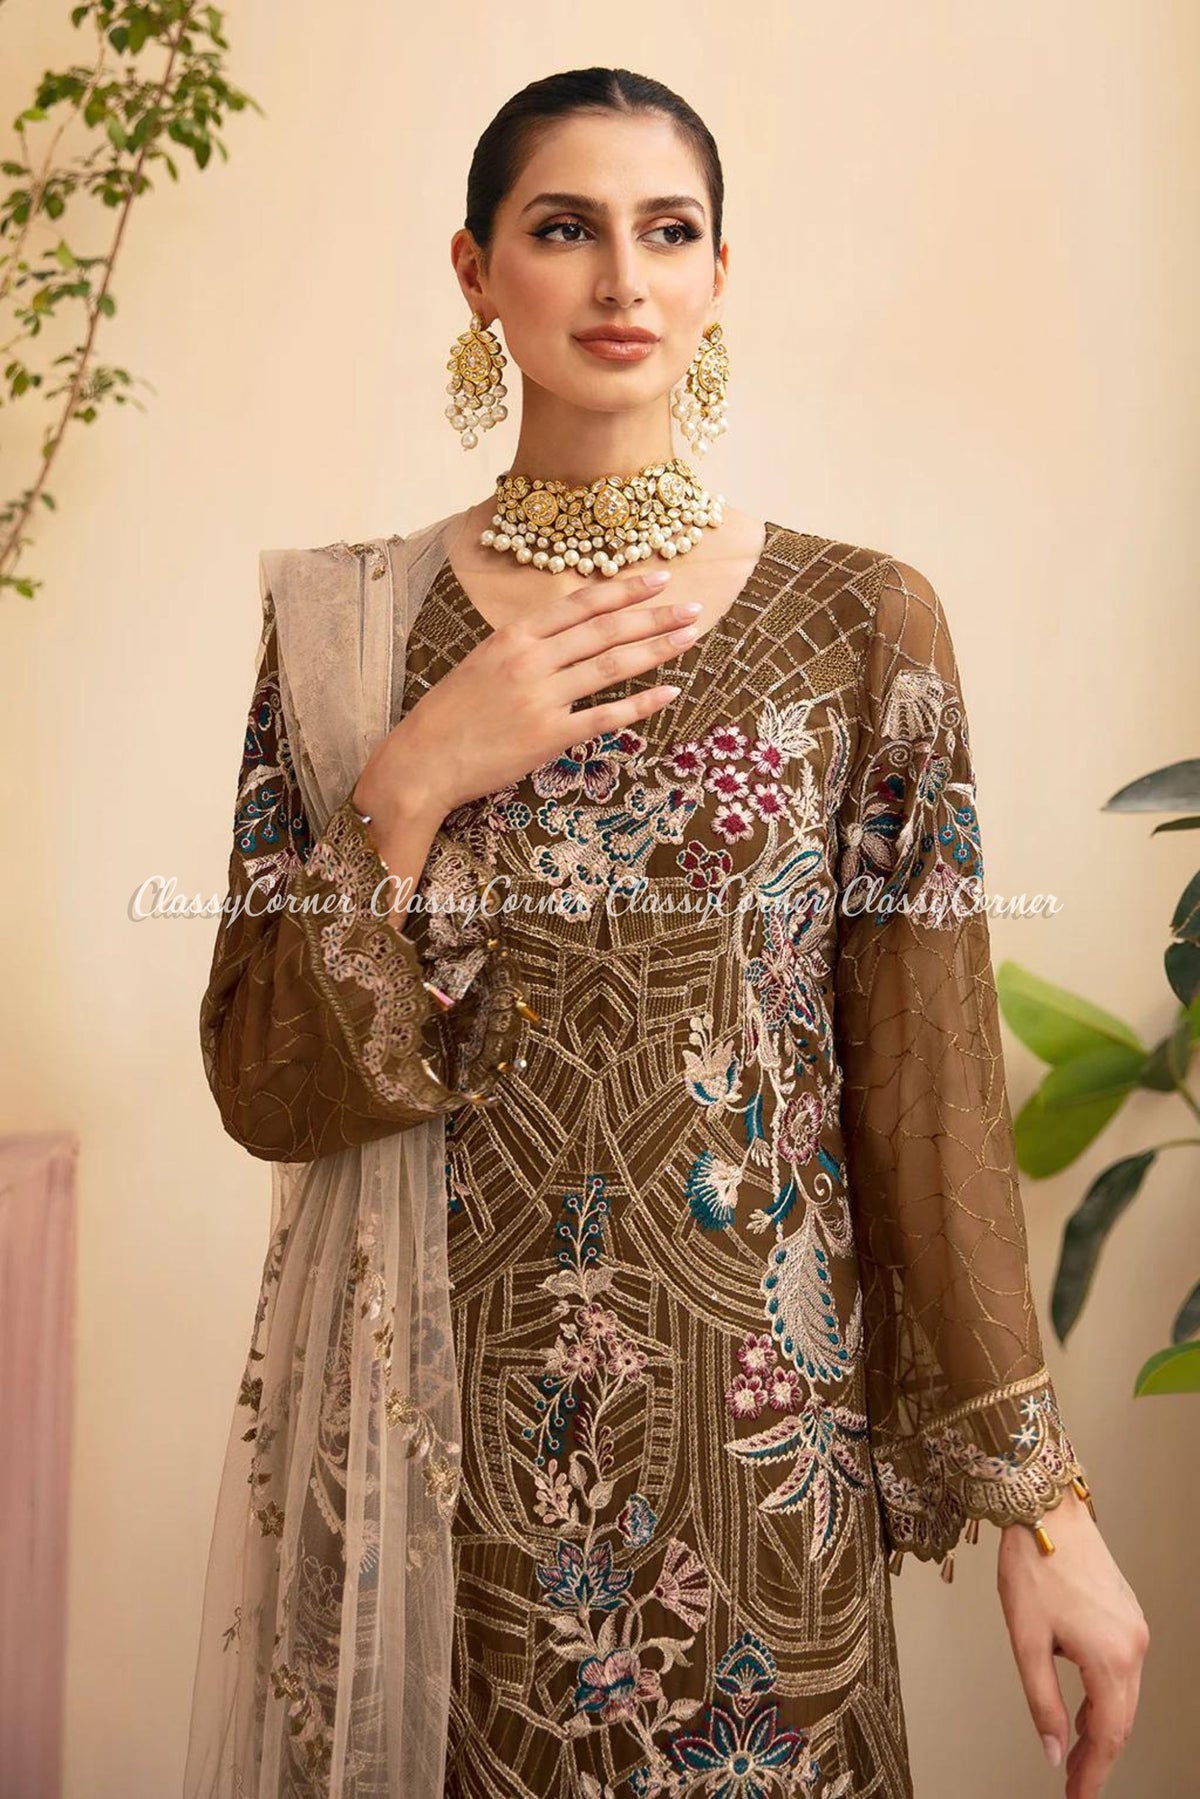 Pakistani wedding outfits for ladies Sydney